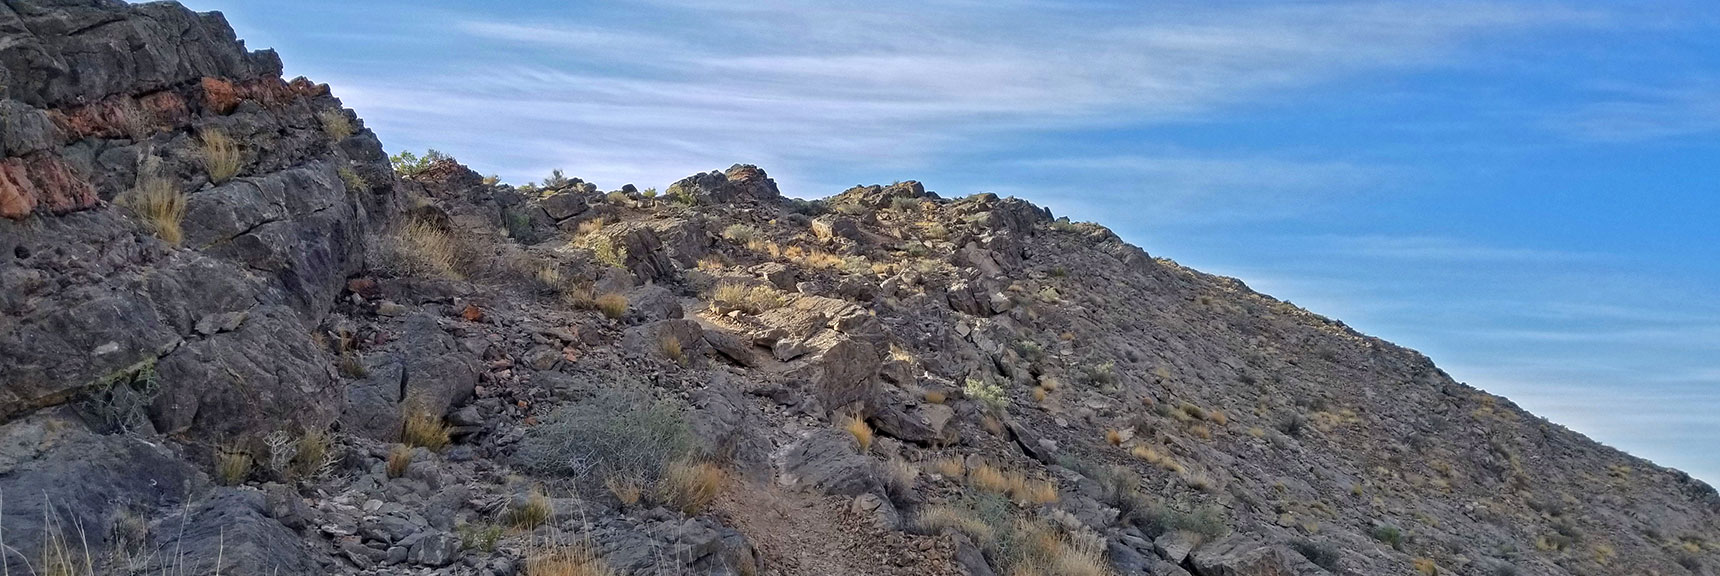 Final Approach to Cheyenne Mt. Summit Ridge | Cheyenne Mountain | Las Vegas, Nevada